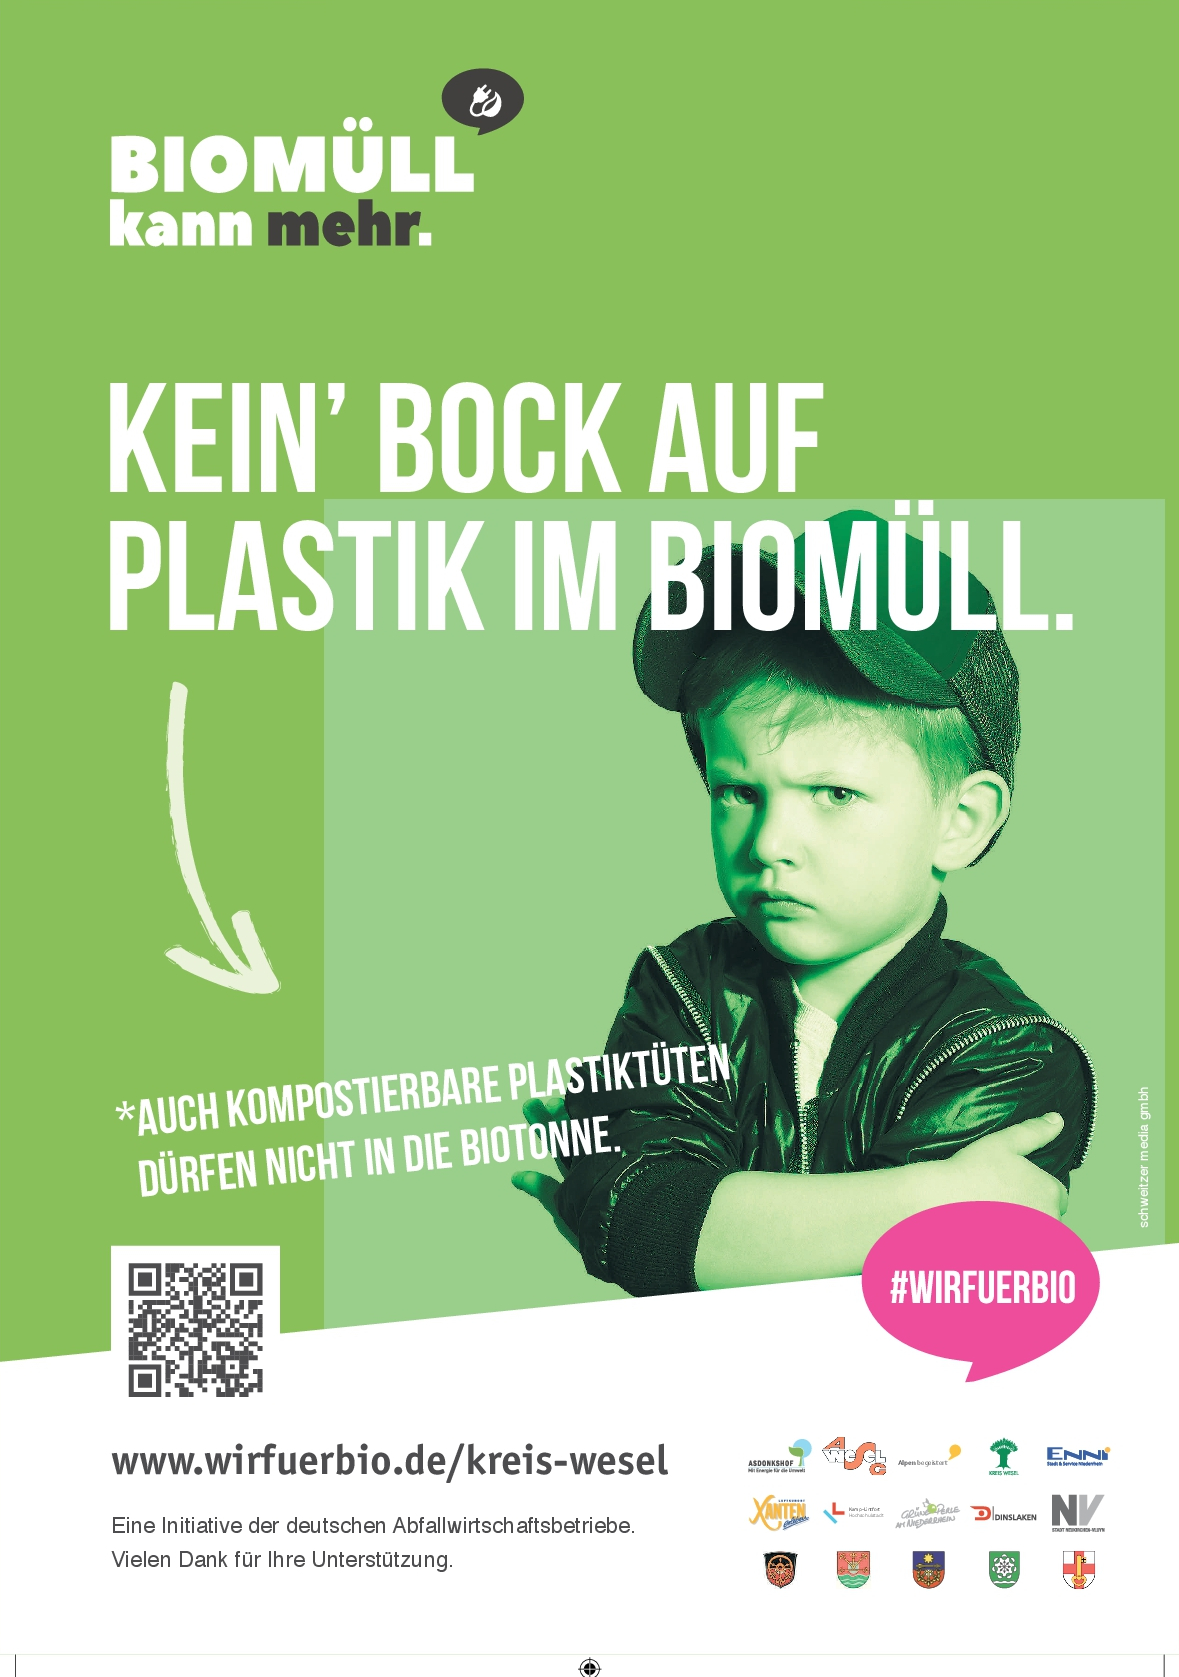 Kampagne "Kein Bock auf Plastik im Biomüll"